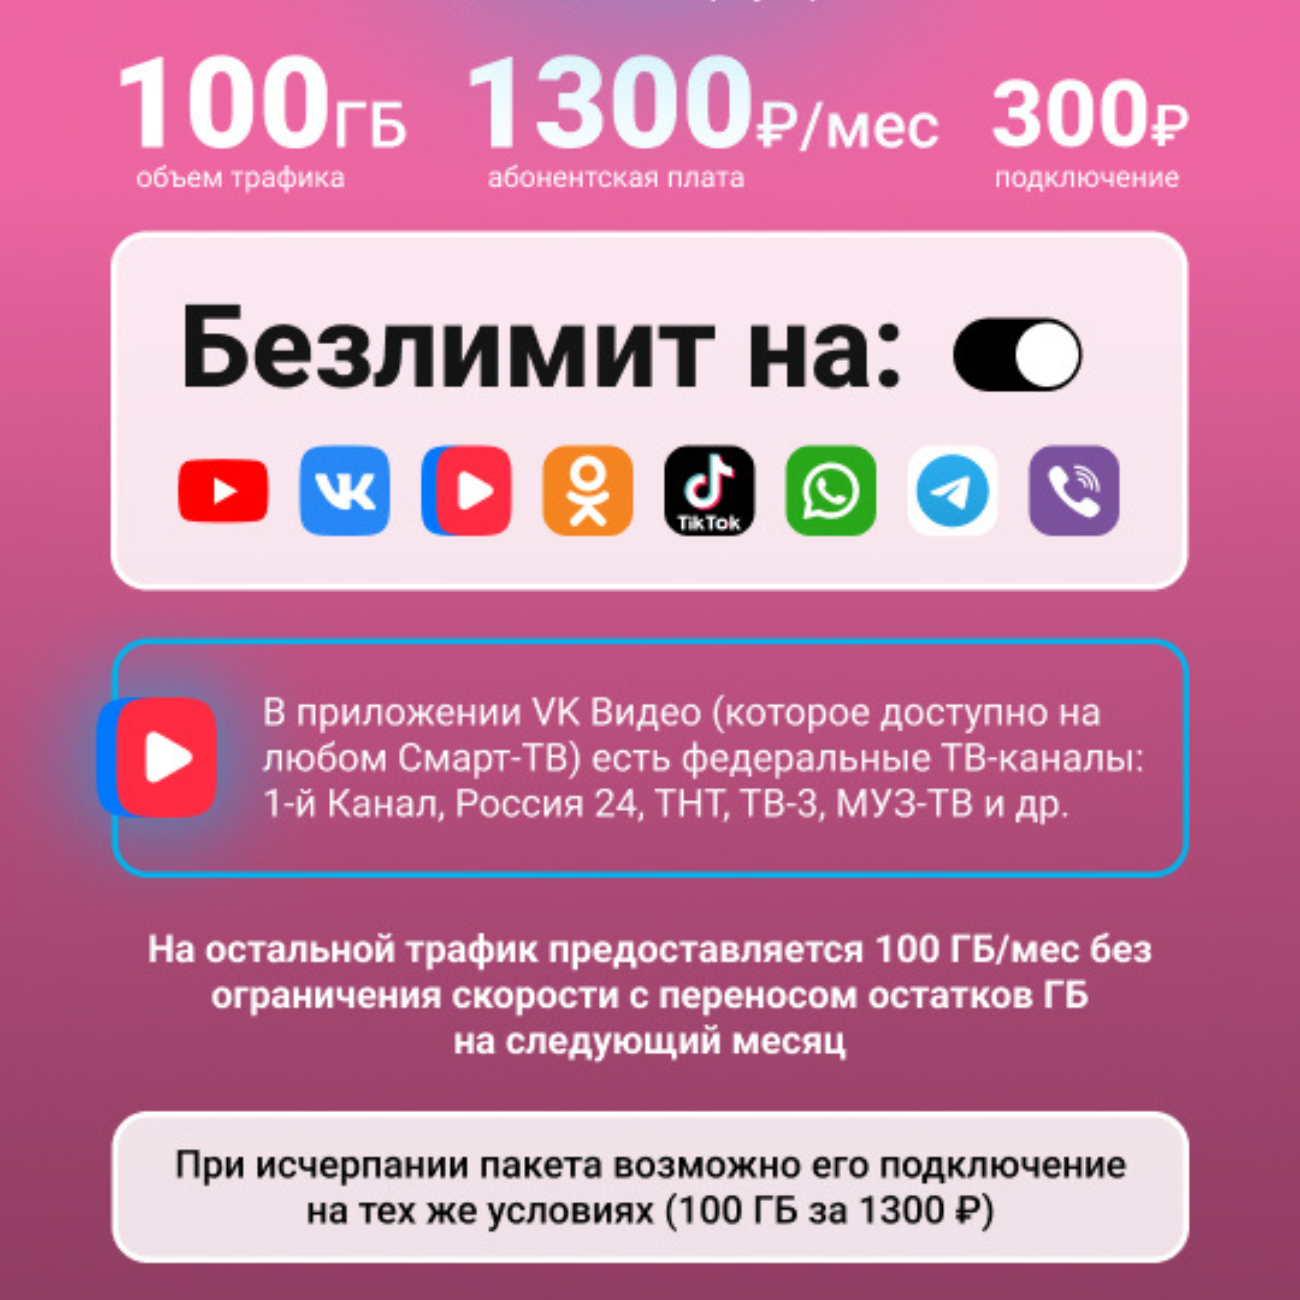 Sim-карта Тариф для модема интернет 100Гб за 1300р/мес (Безлимитный на соц. сети* в сети T2)